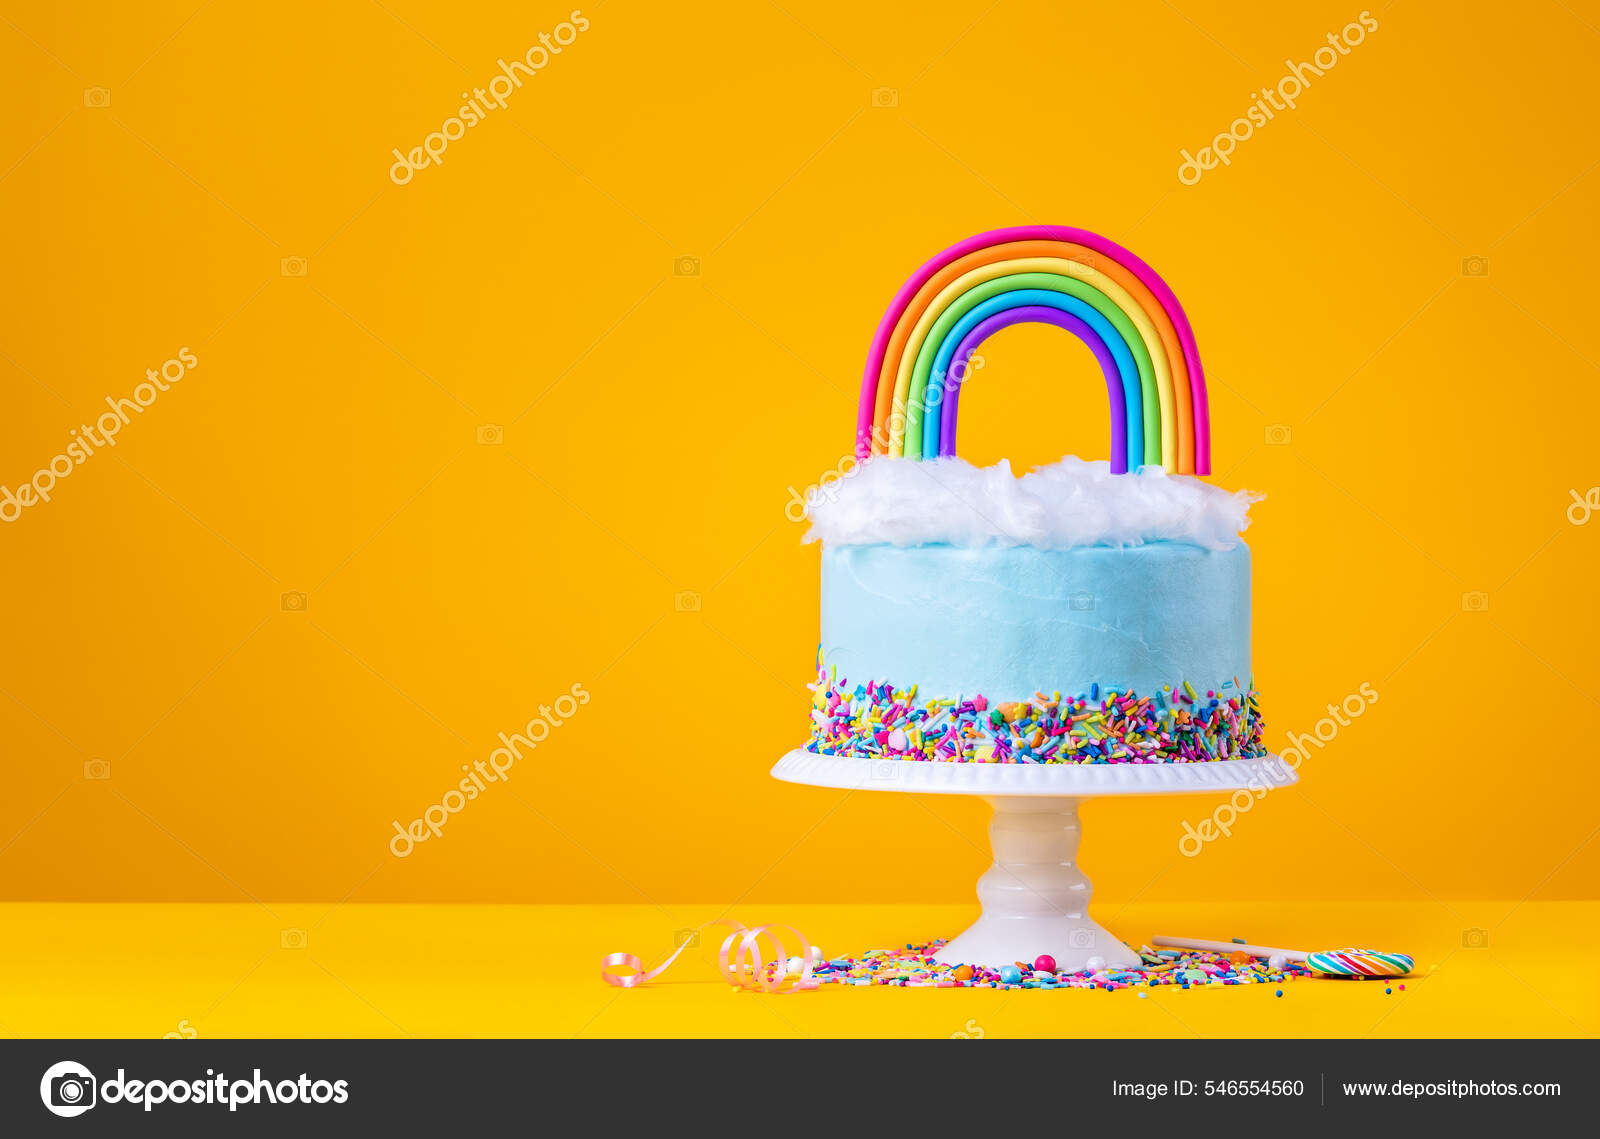 Pastel de cumpleaños azul con tapa de arco iris en amarillo: fotografía de  stock © juliannafunk #546554560 | Depositphotos